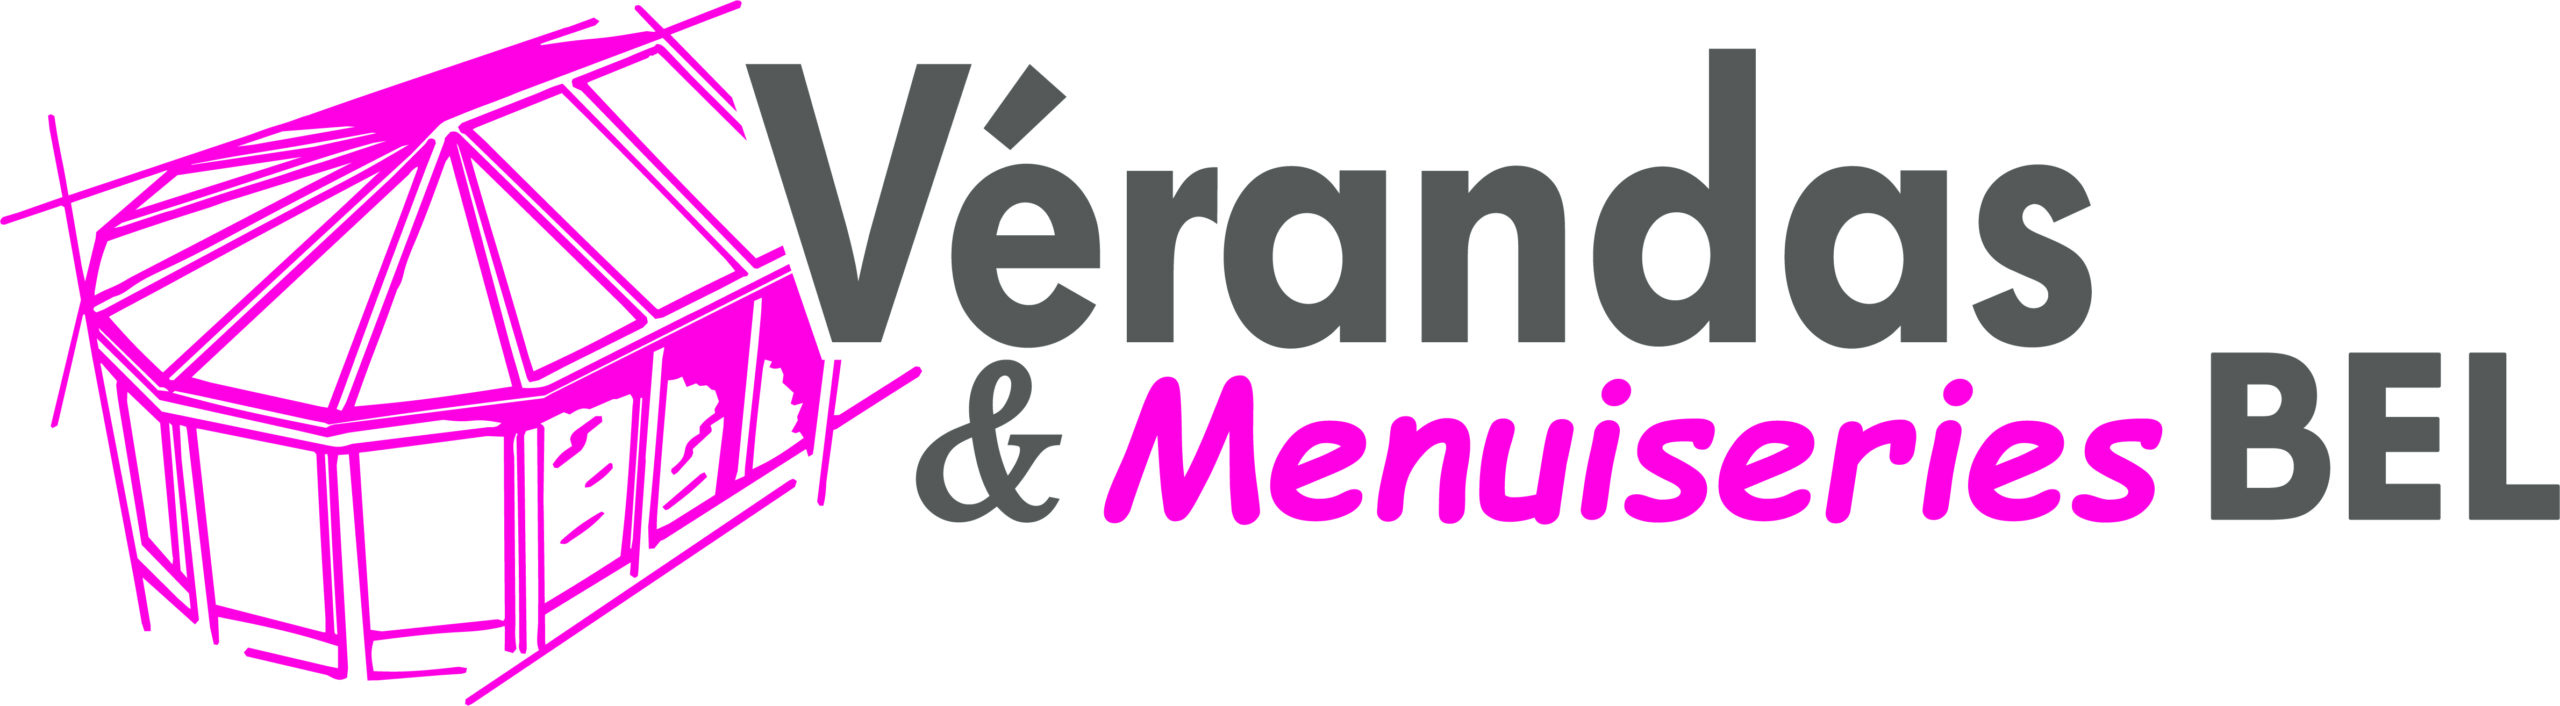 logo verandas Menuiseries Bel scaled